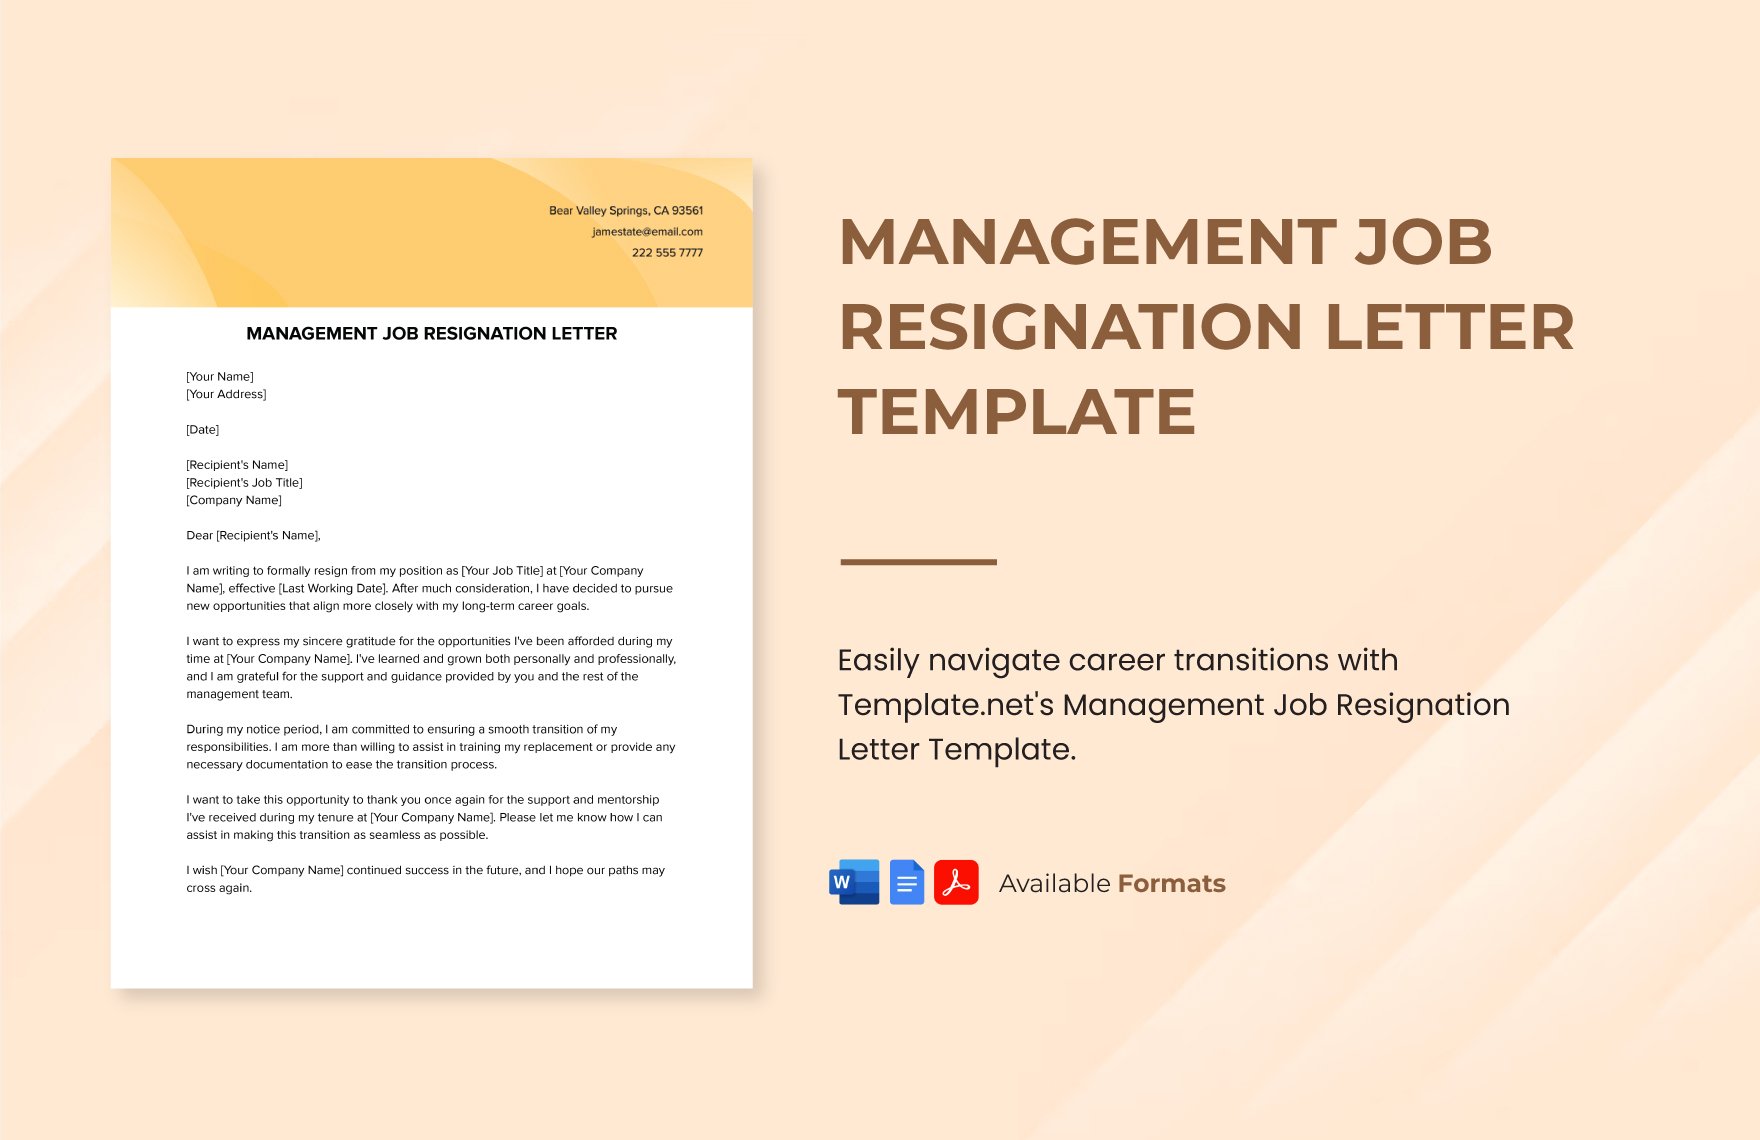 Management Job Resignation Letter Template